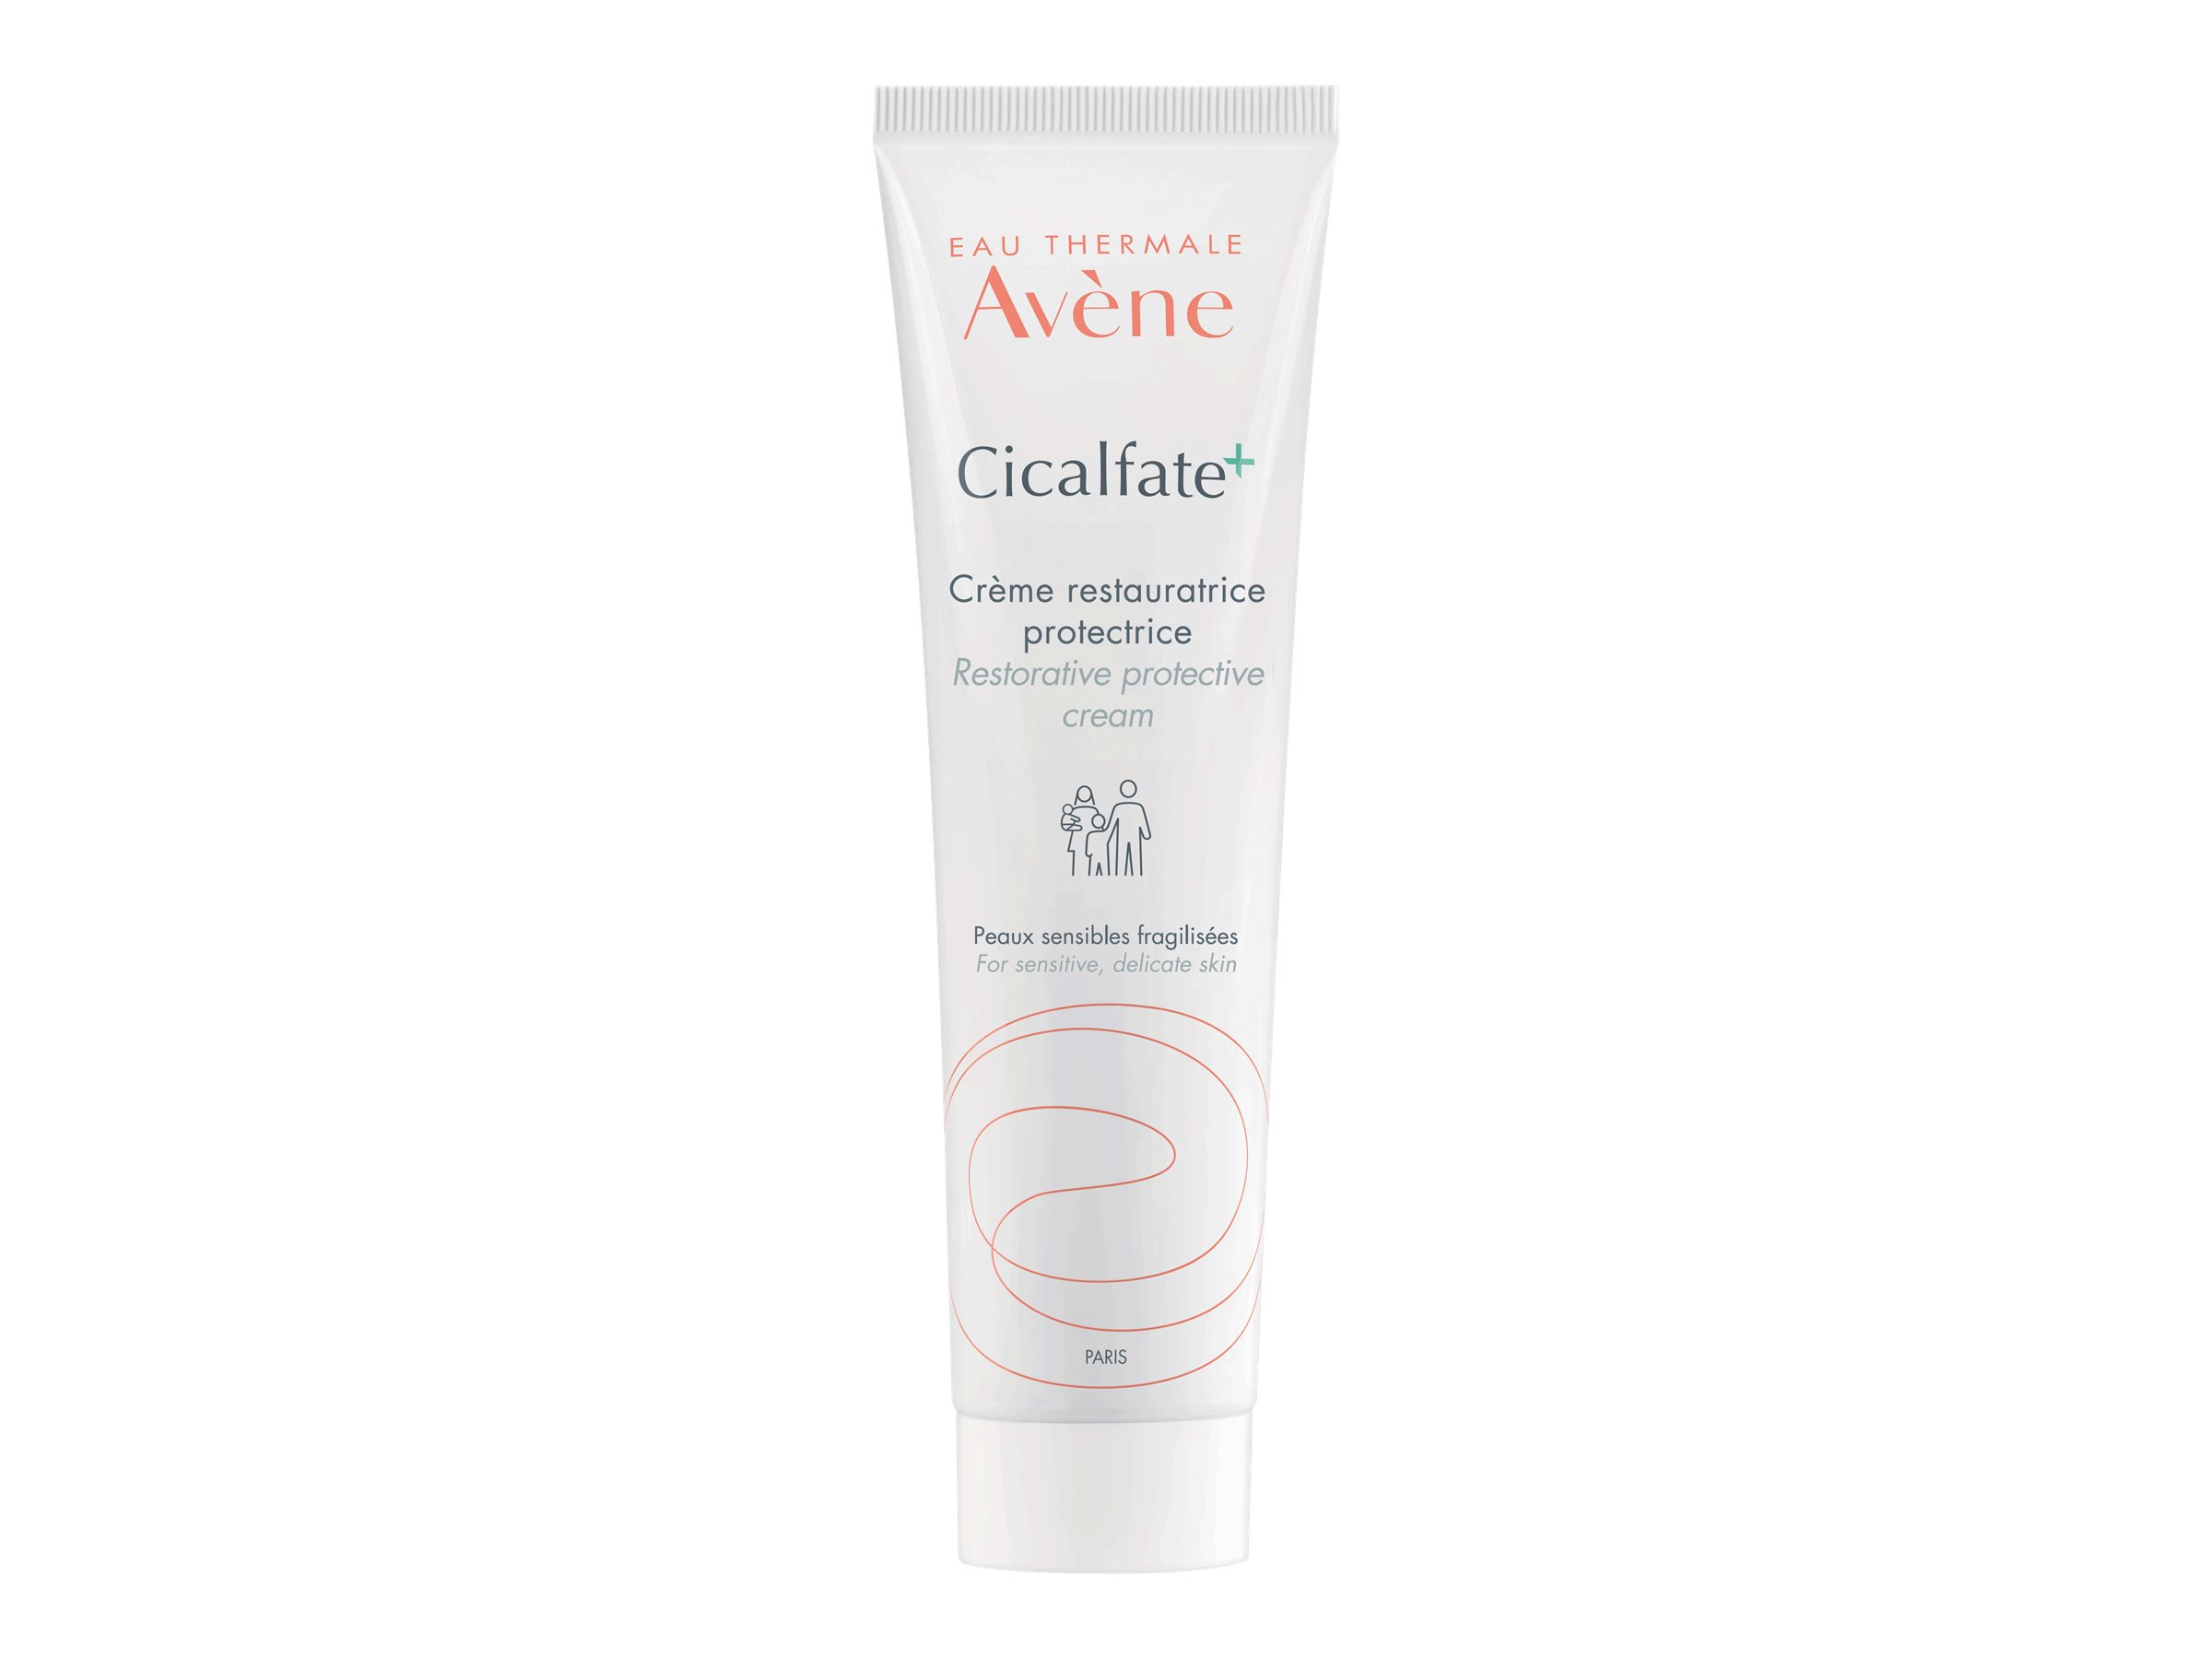 Eau Thermale Avene Cicalfate+ Restorative Protective Cream - 100ml